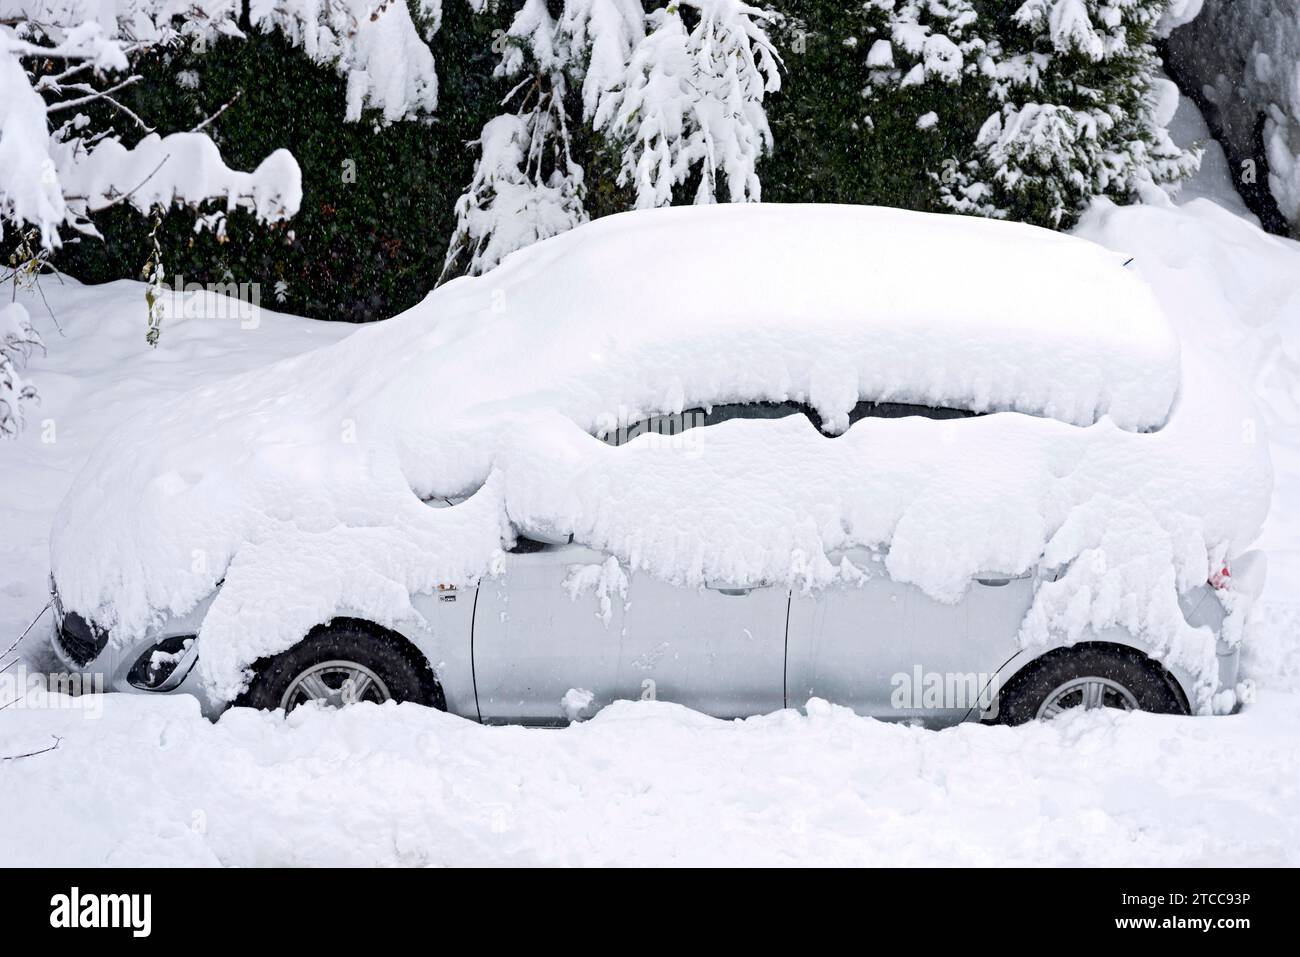 Car, passenger car, snowed in on car park, fresh snow, heavy snowfall, snow masses, snow chaos, onset of winter, Marzling, Freising, Upper Bavaria Stock Photo